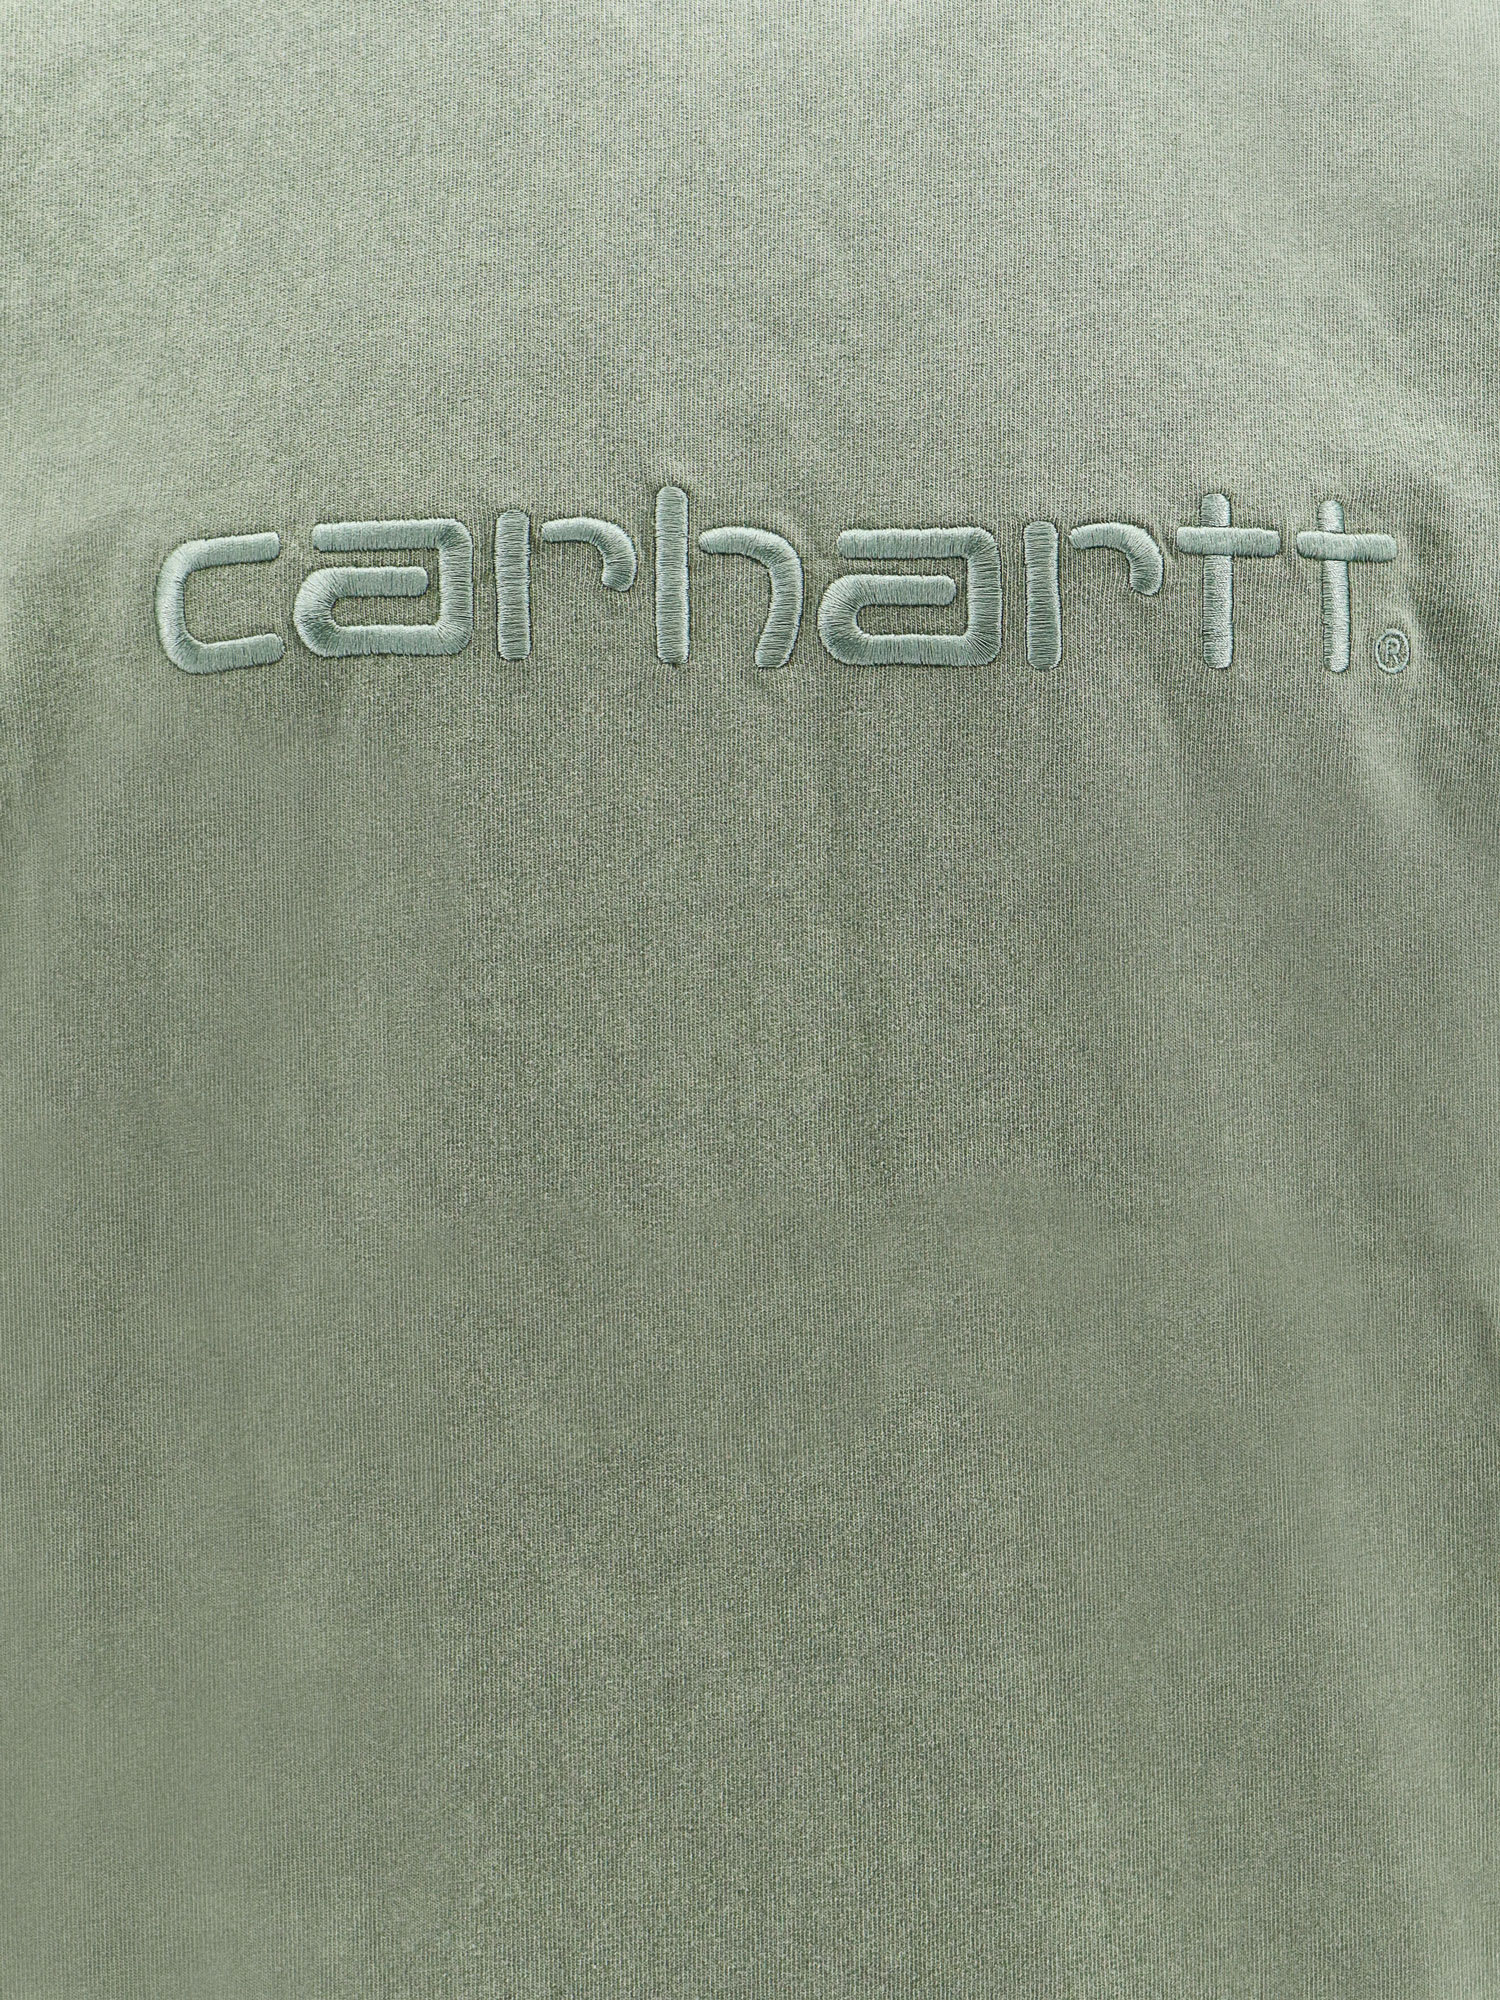 Shop Carhartt Duster T-shirt In Green